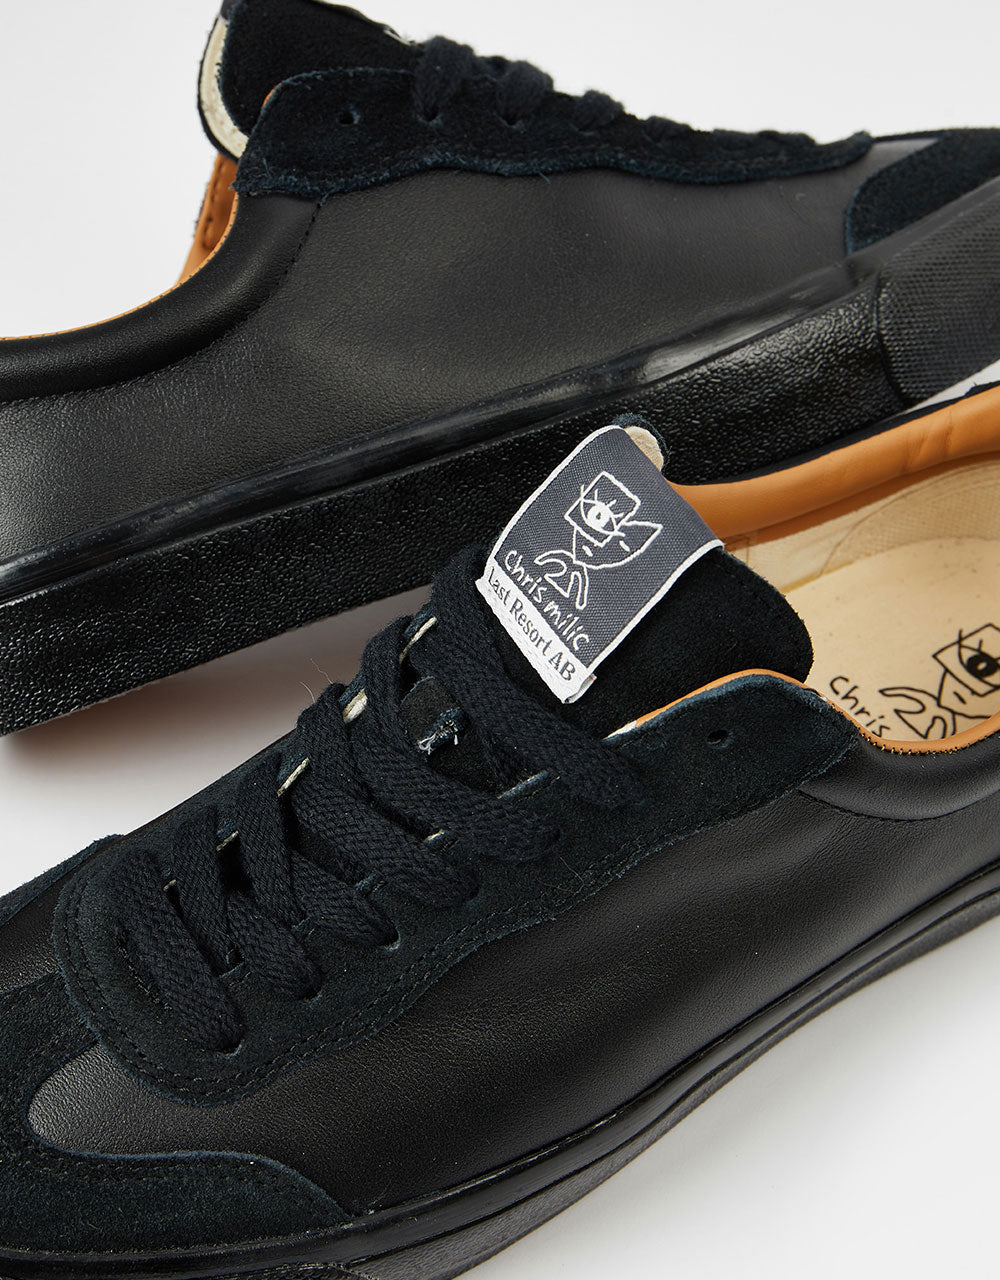 Last Resort AB VM004 Milic Leather/Suede Lo Skate Shoes - Duo Black/Black